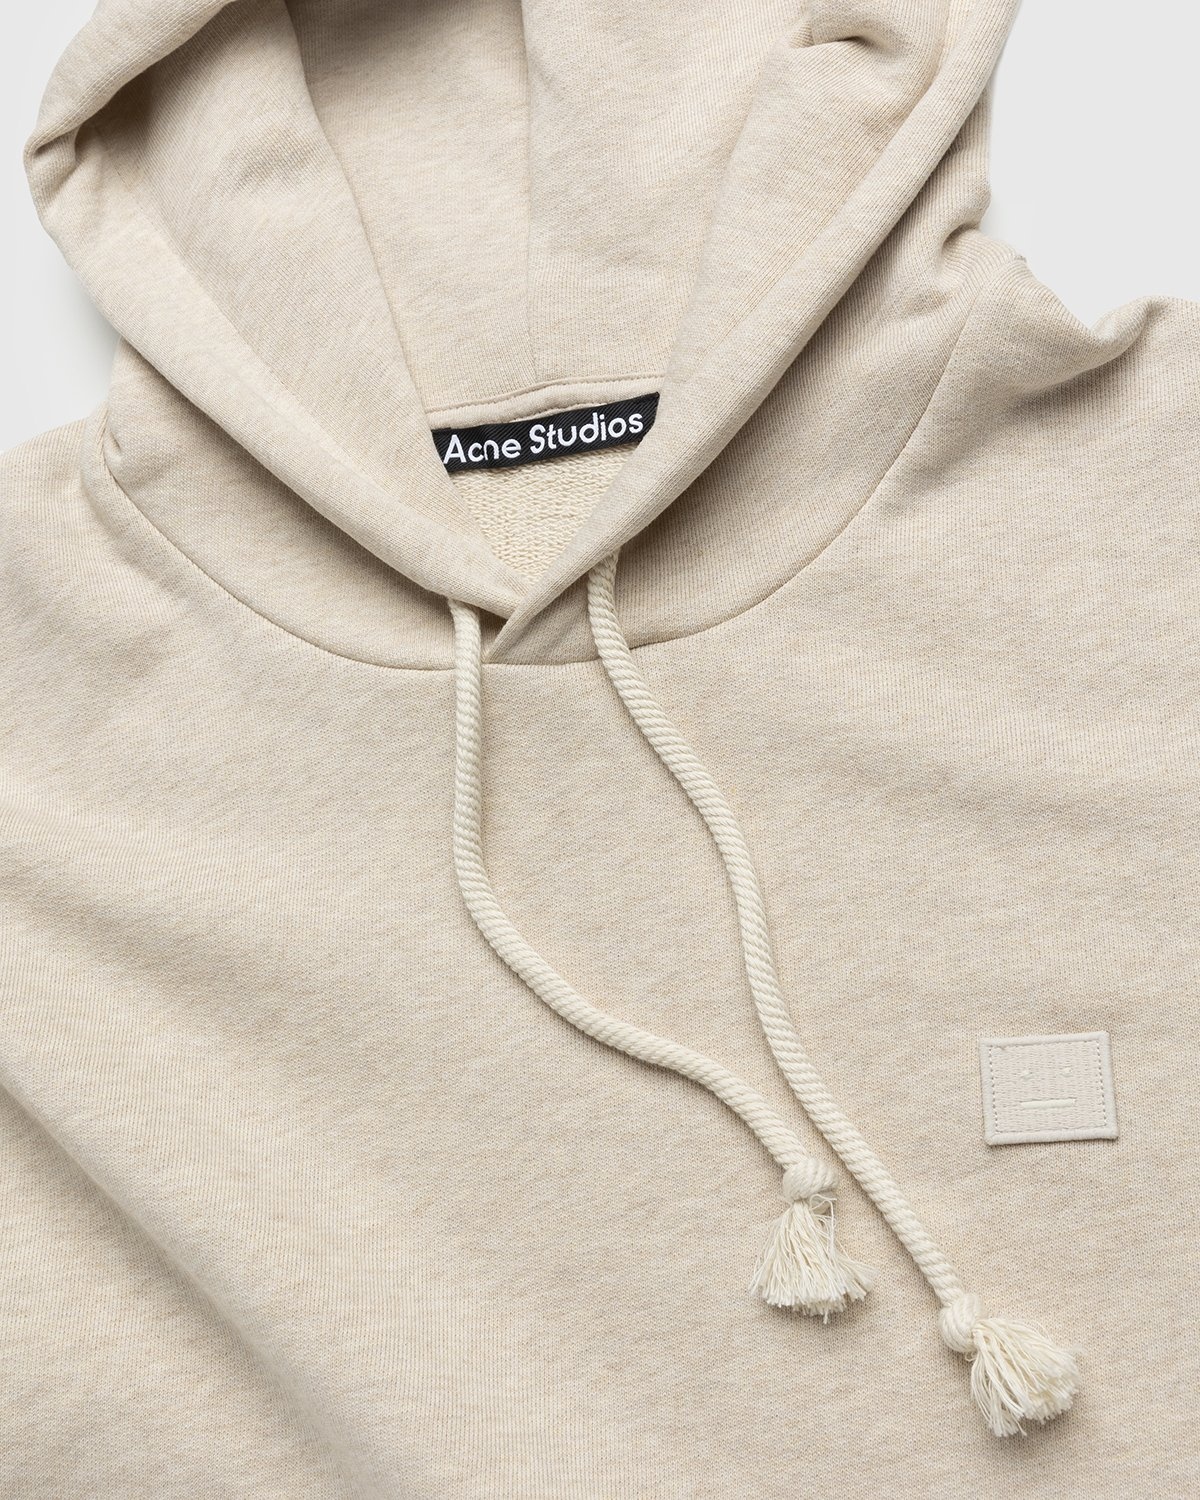 Acne Studios – Organic Cotton Hooded Sweatshirt Oatmeal Melange - Sweats - Beige - Image 3